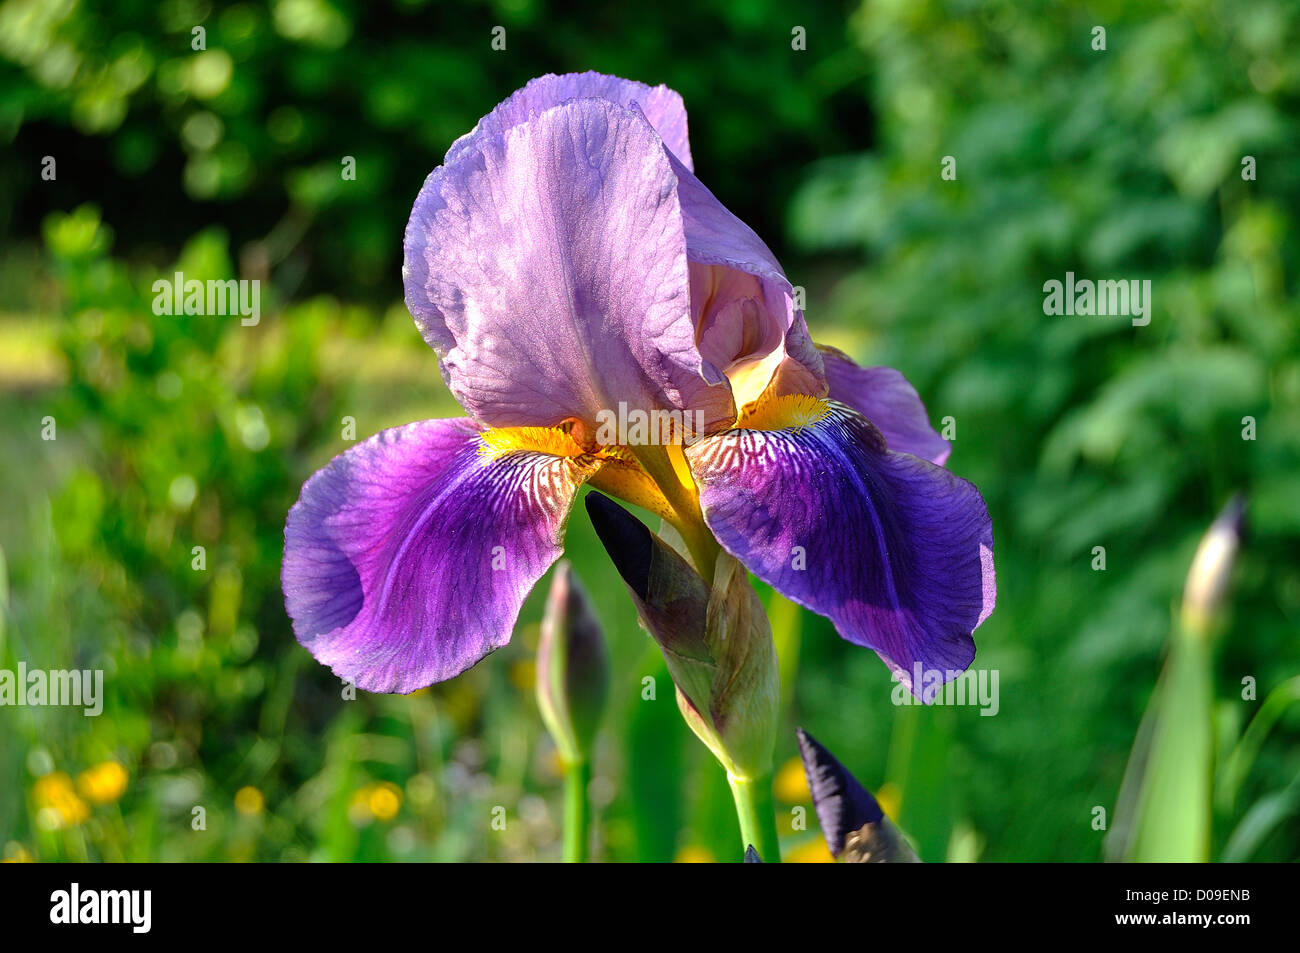 Fleur d'iris (iris germanica, hybride Barbata -Elatior) en fleurs, en mai, dans un jardin. Banque D'Images